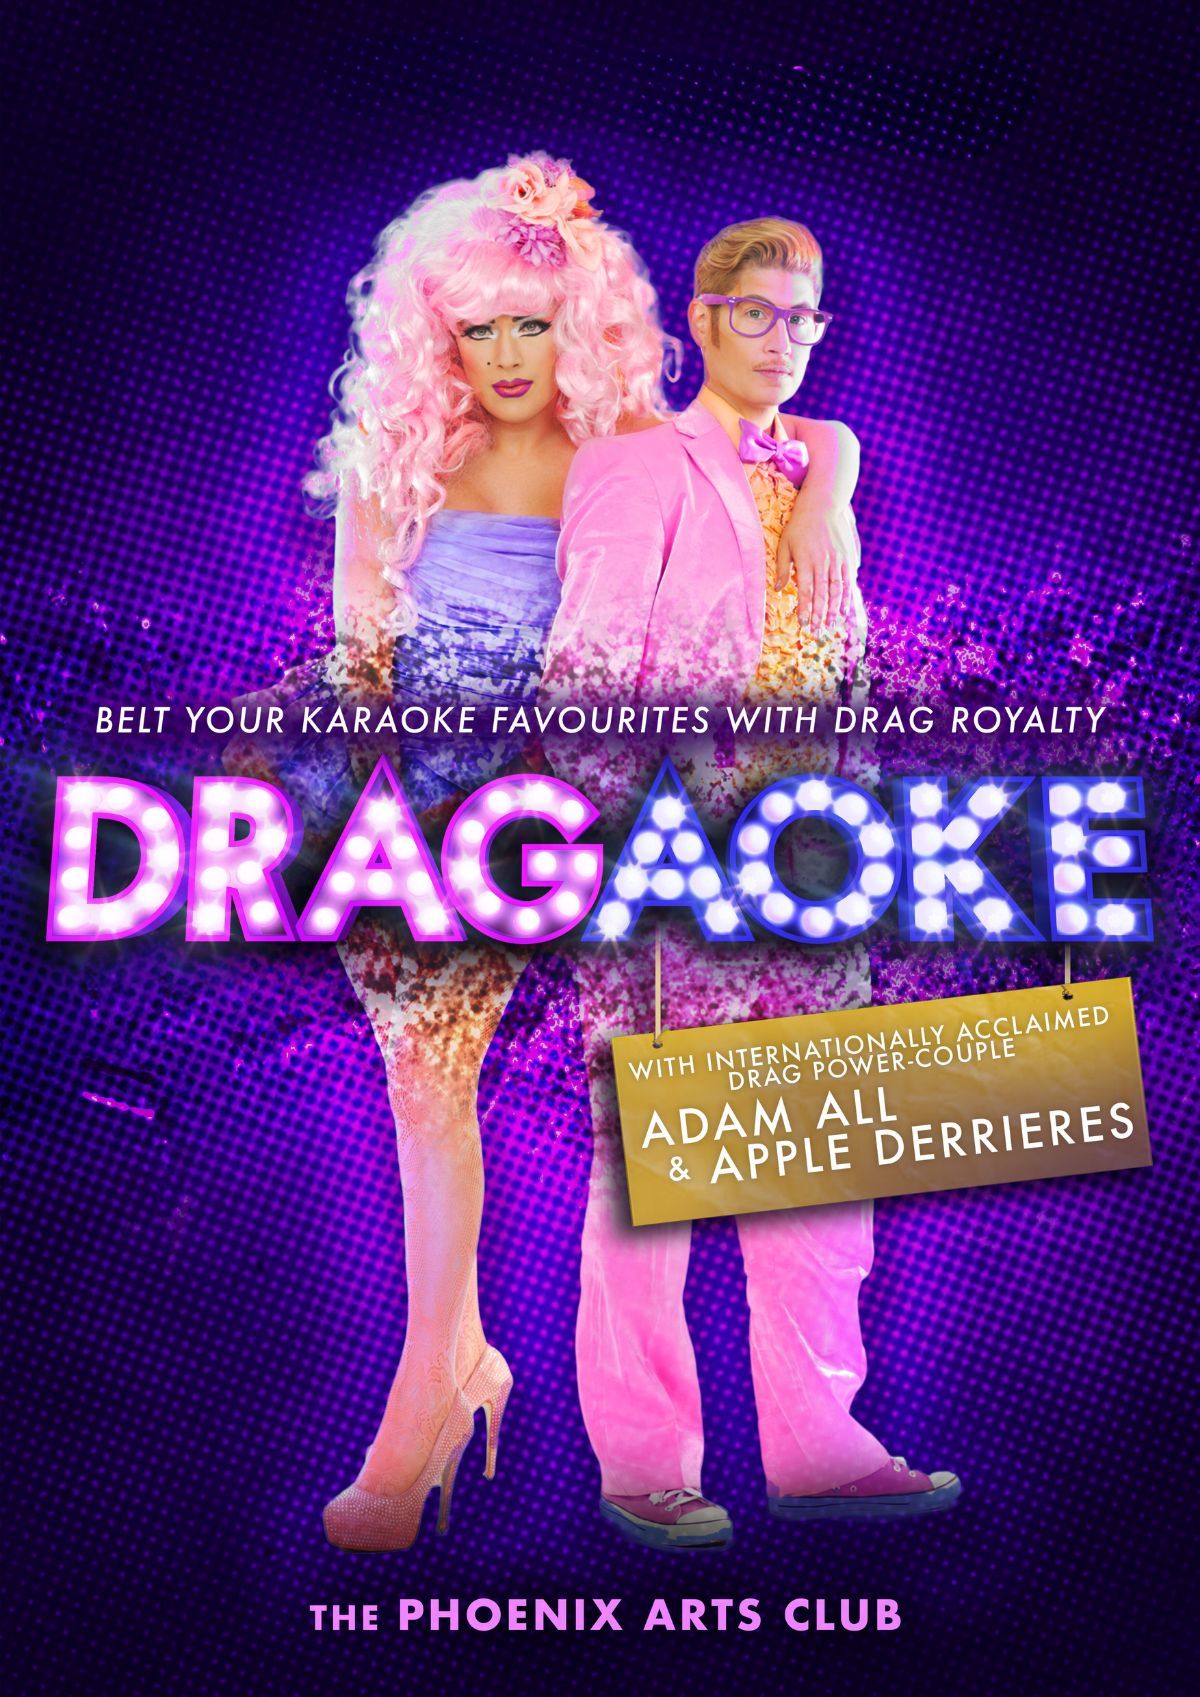 Dragaoke! The Karaoke Night Hosted By Drag Royalty!